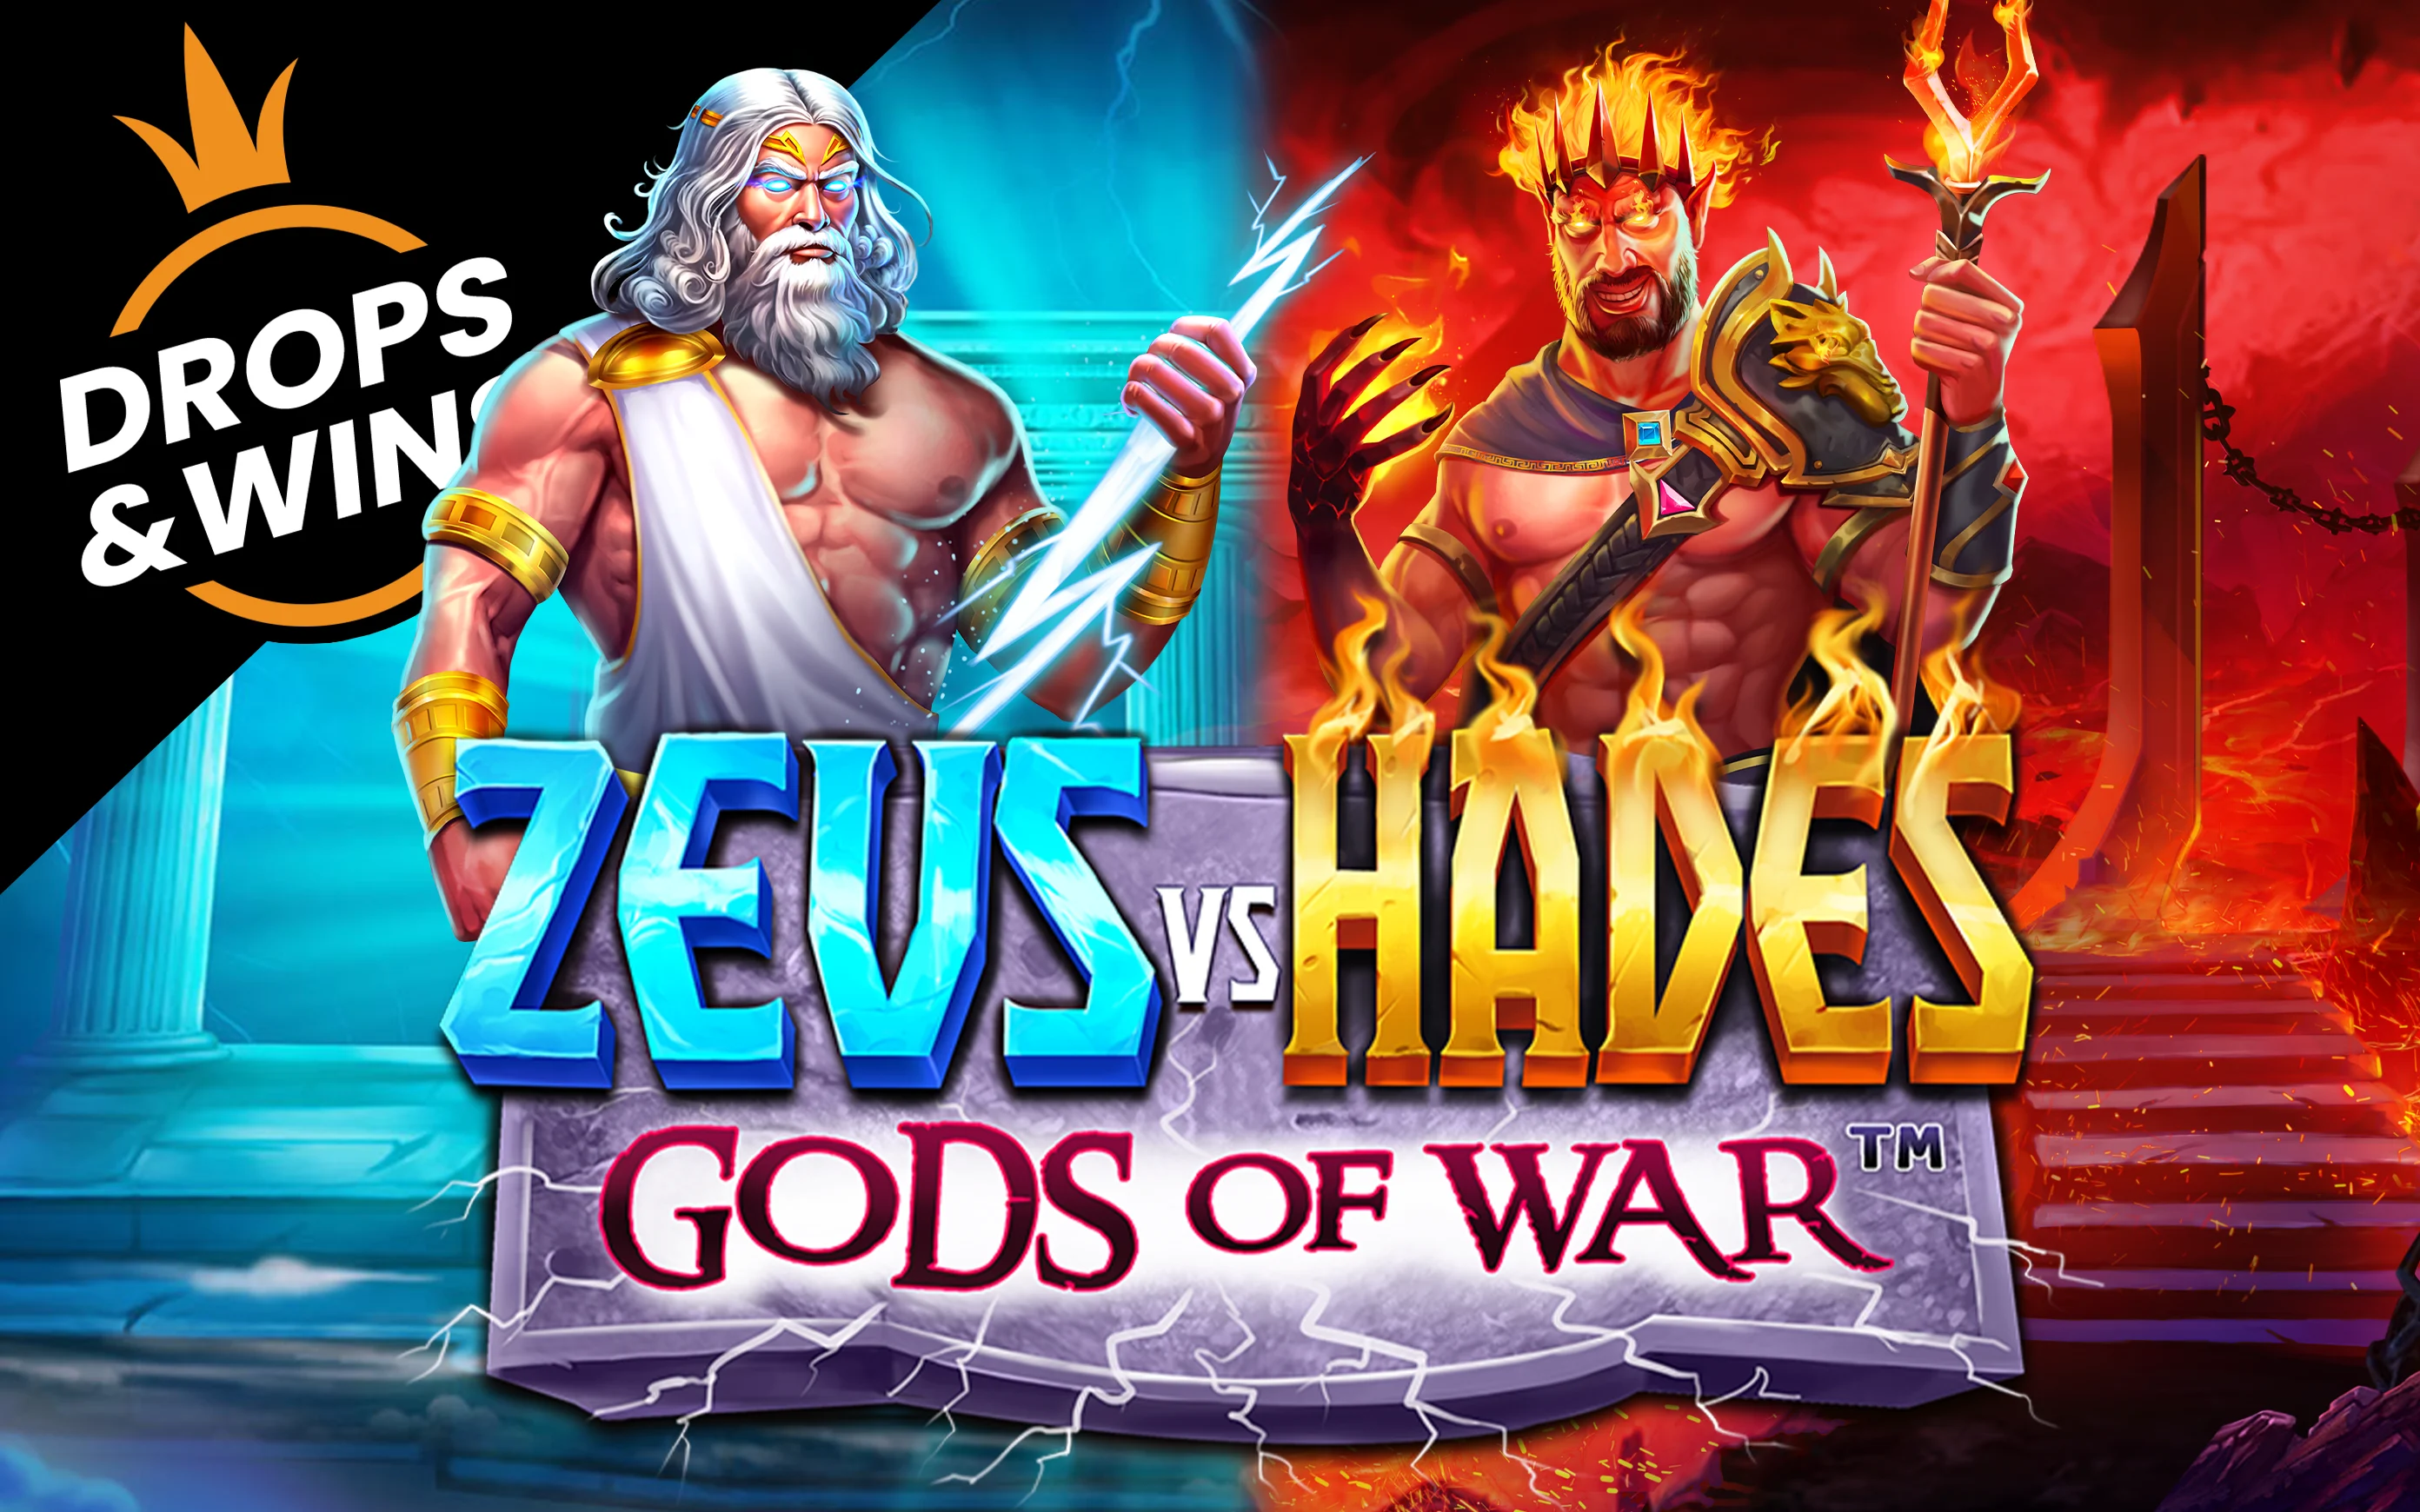 Gioca a Zeus vs Hades - Gods of War™ sul casino online Starcasino.be